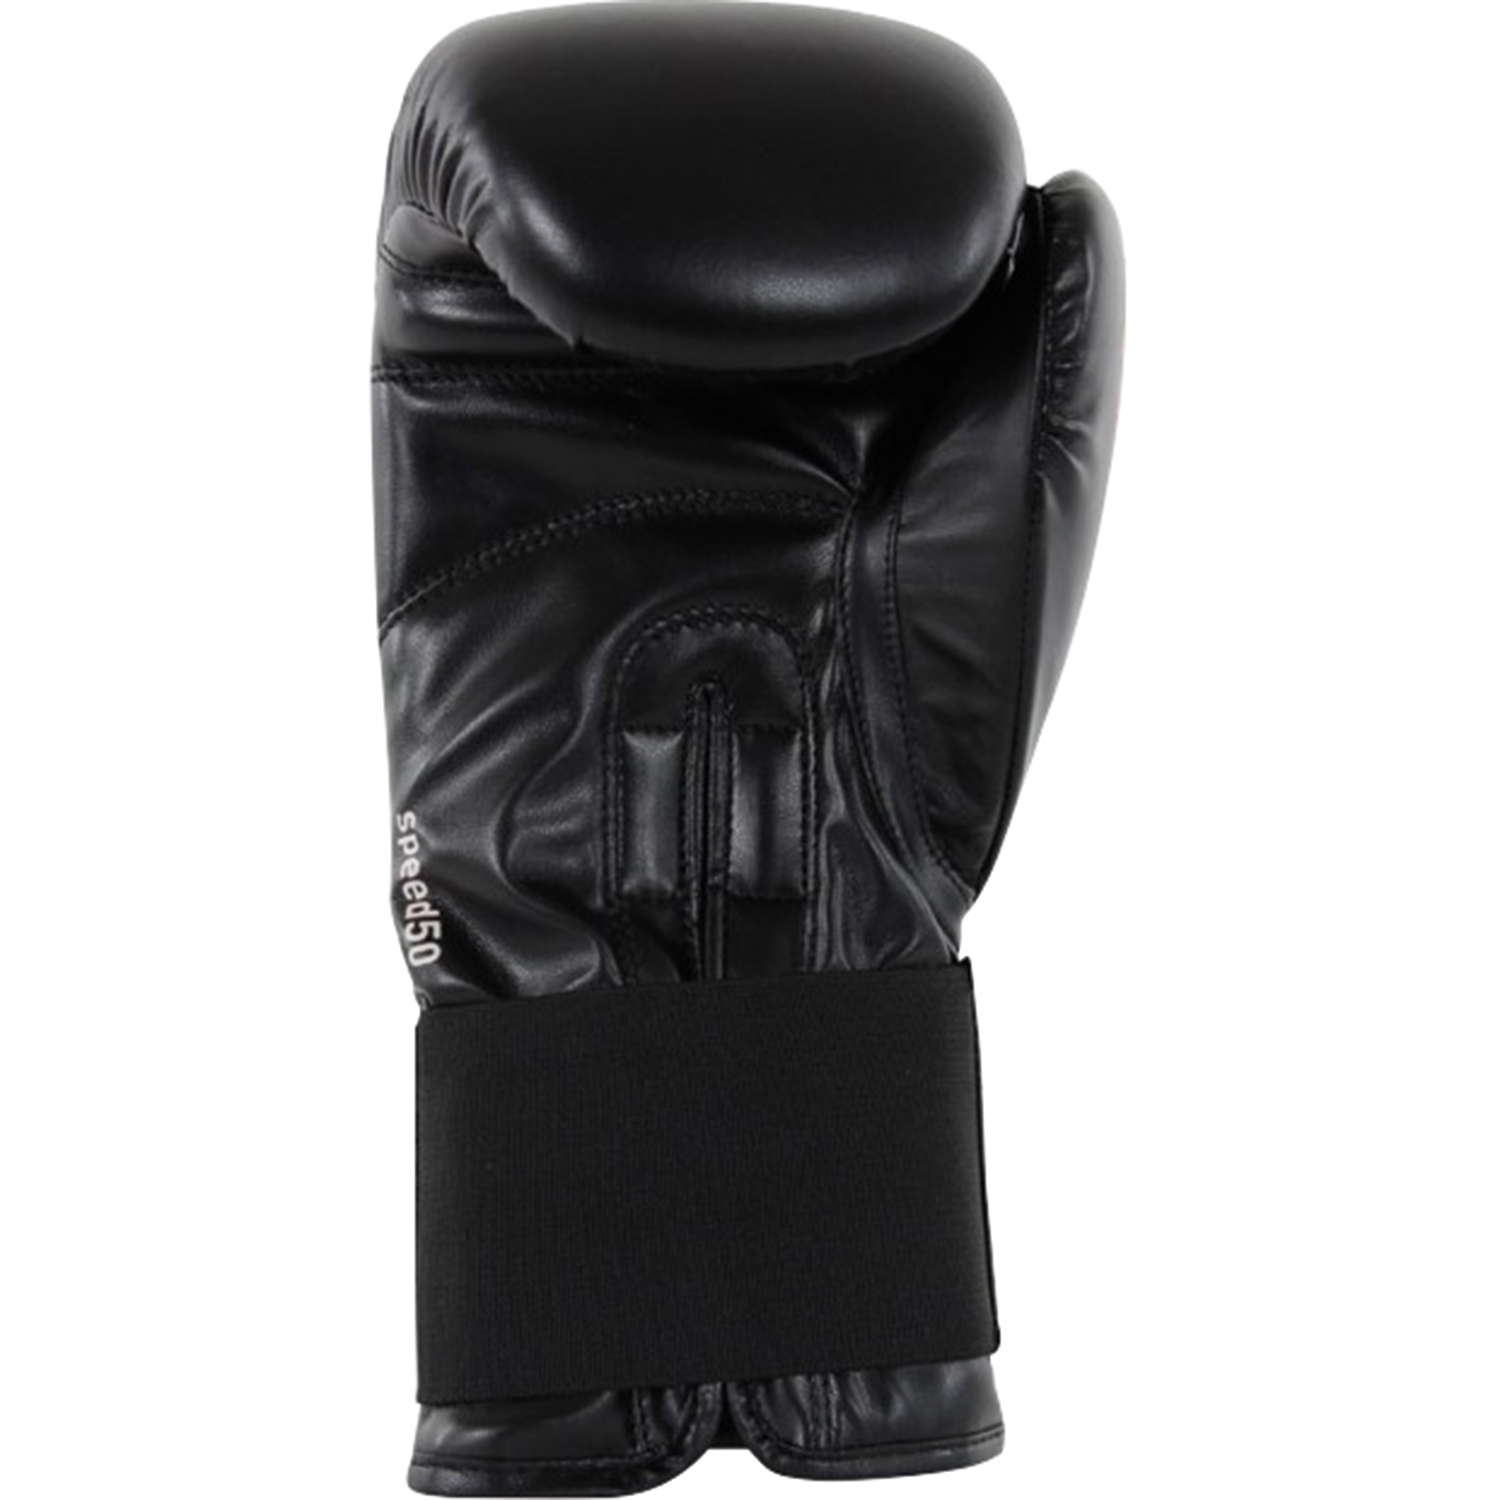 Adidas Speed 50 boxing gloves black/white 10 oz